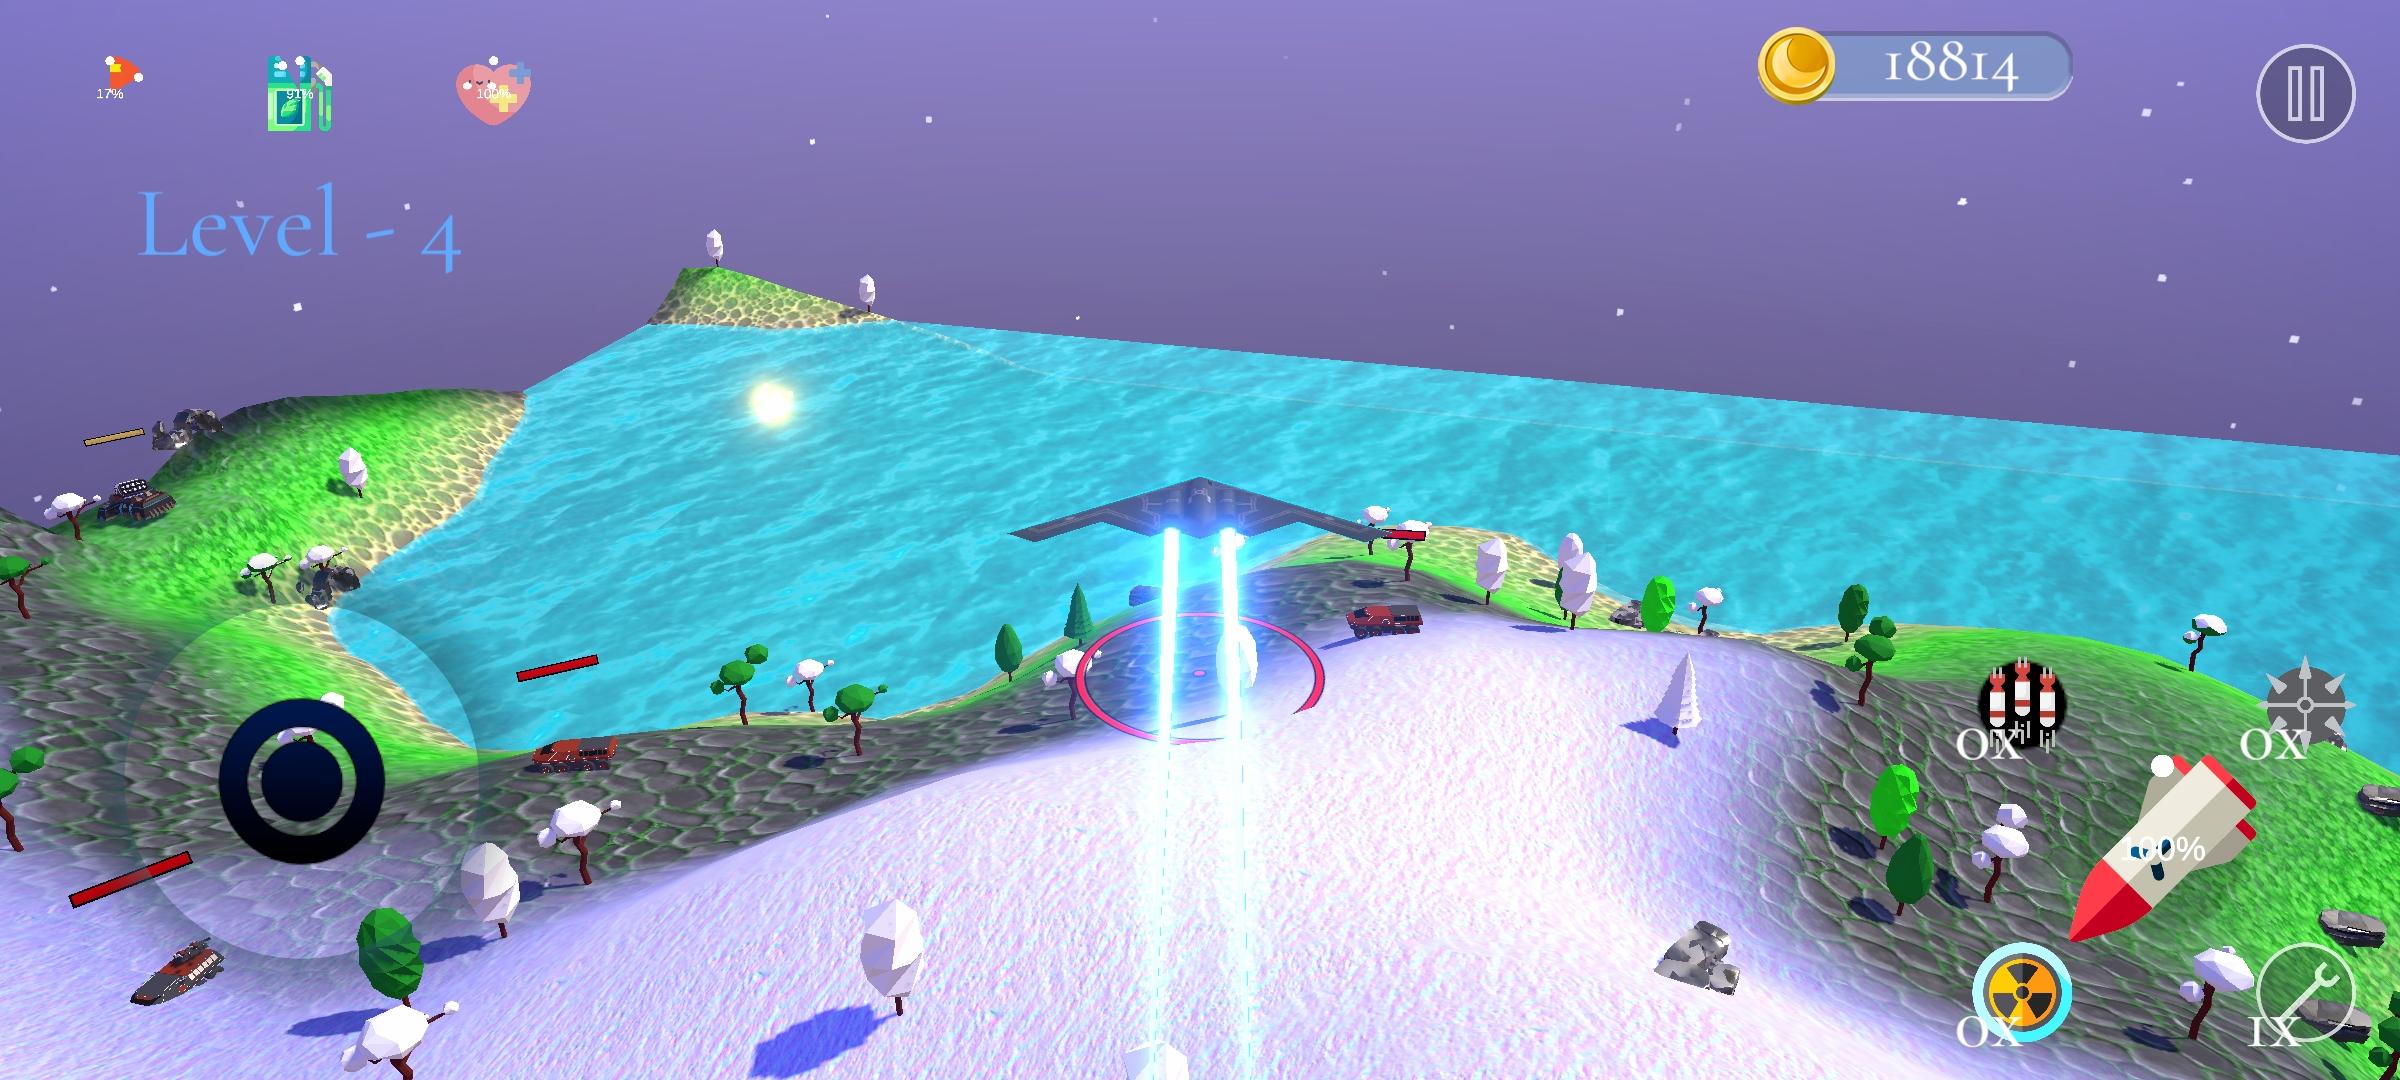 Infinite Bomber 3D 1.8 Screenshot 23